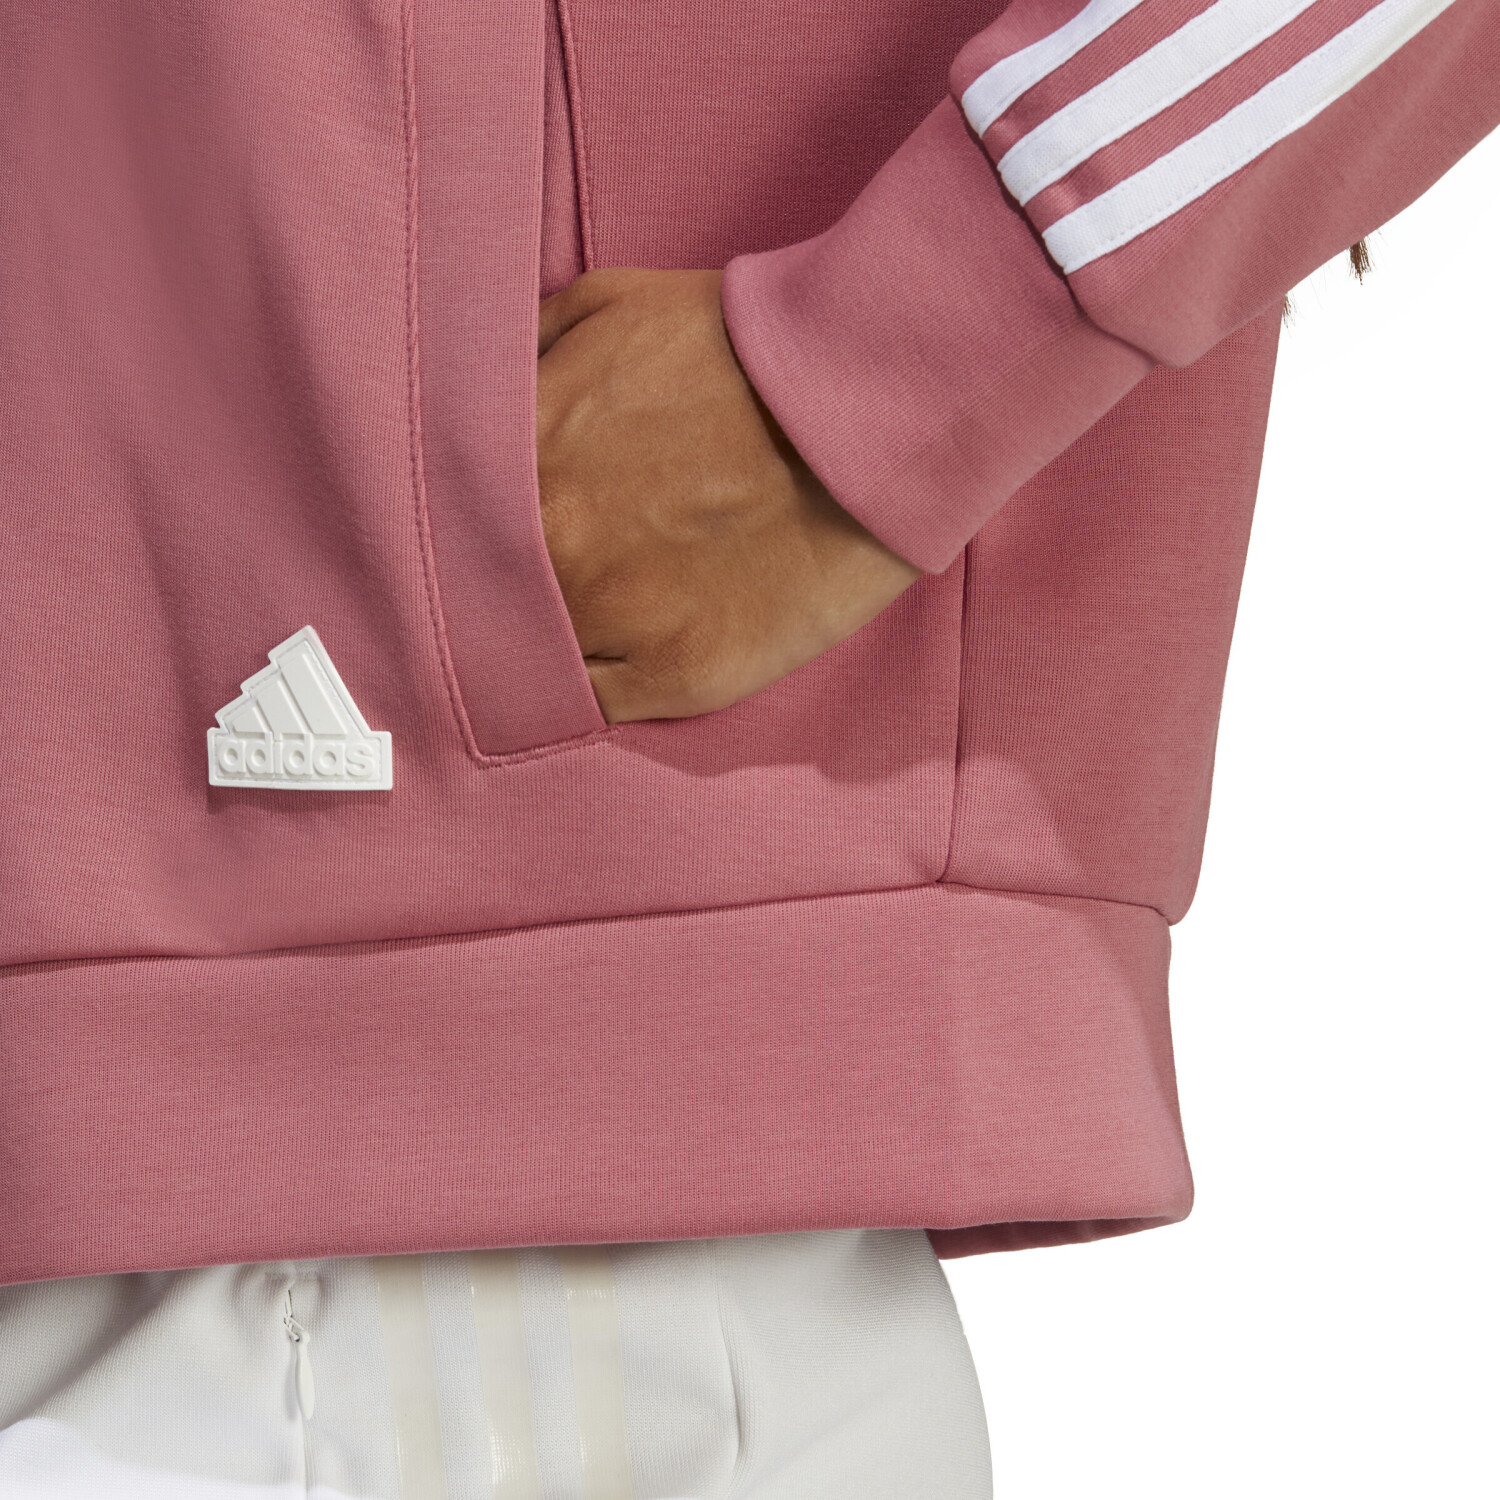 Adidas Future Icons 3 Stripes pink (IB8513) ab 45,00 € | Preisvergleich bei